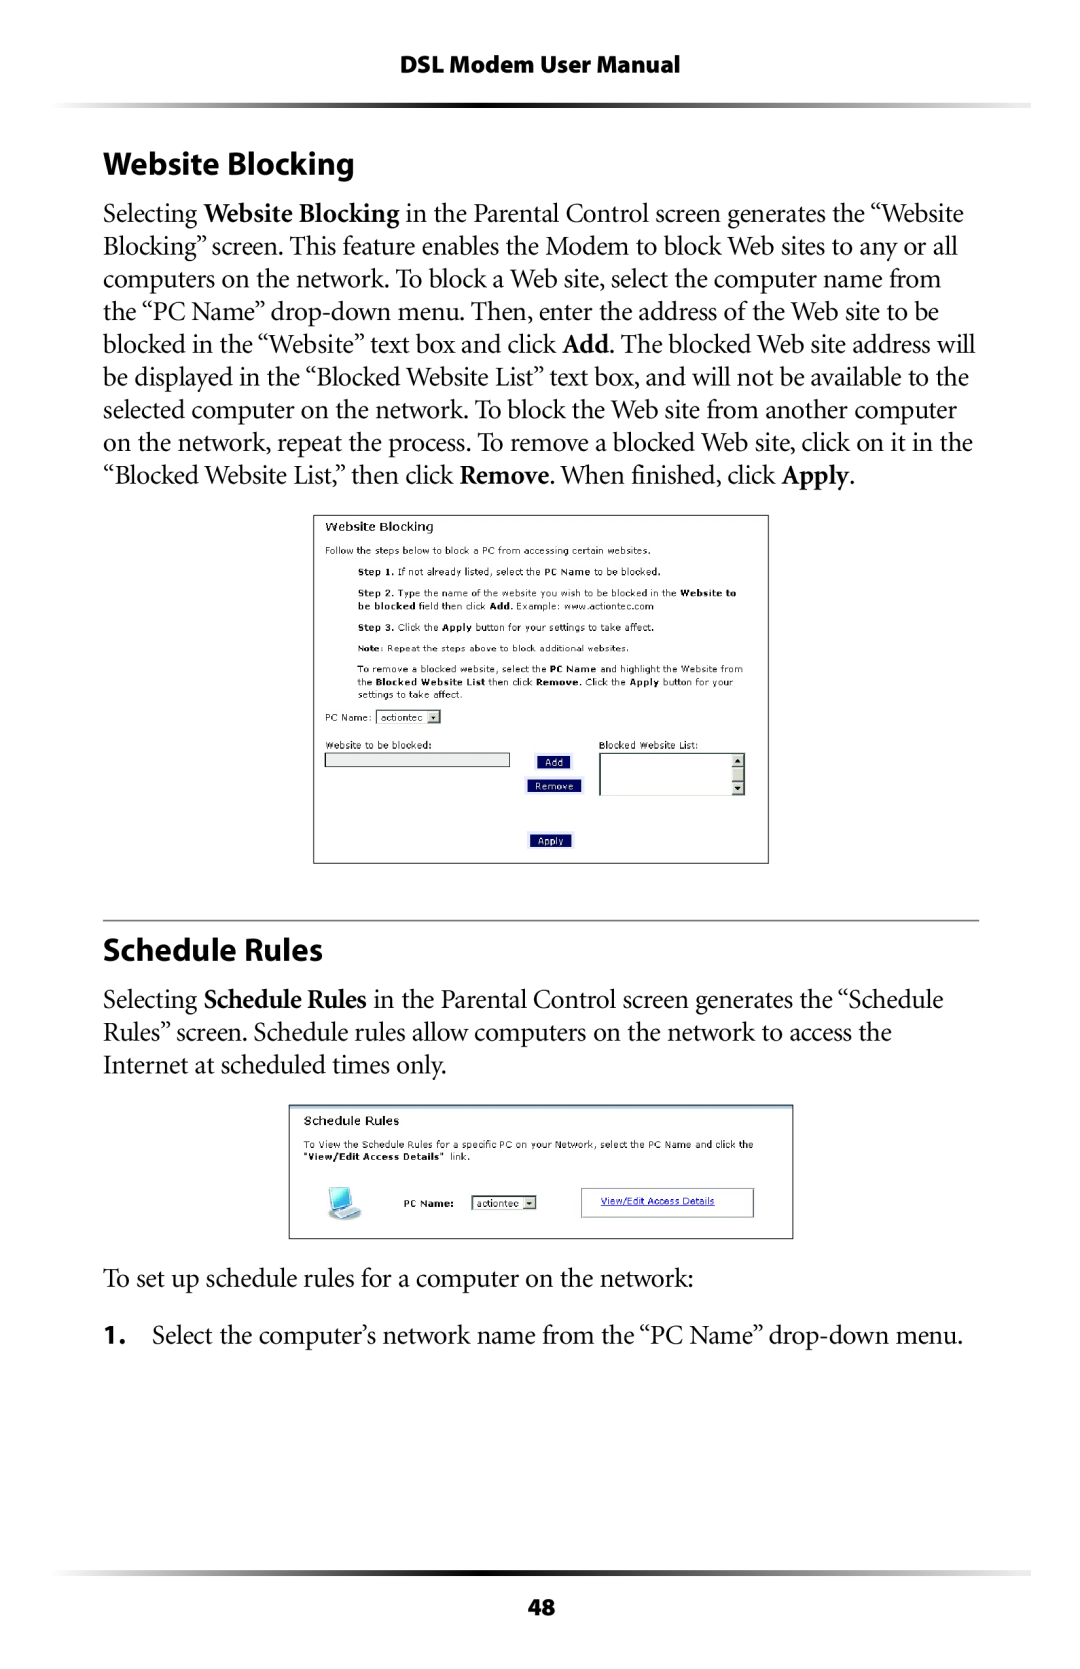 Verizon GT701C user manual Website Blocking, Schedule Rules 